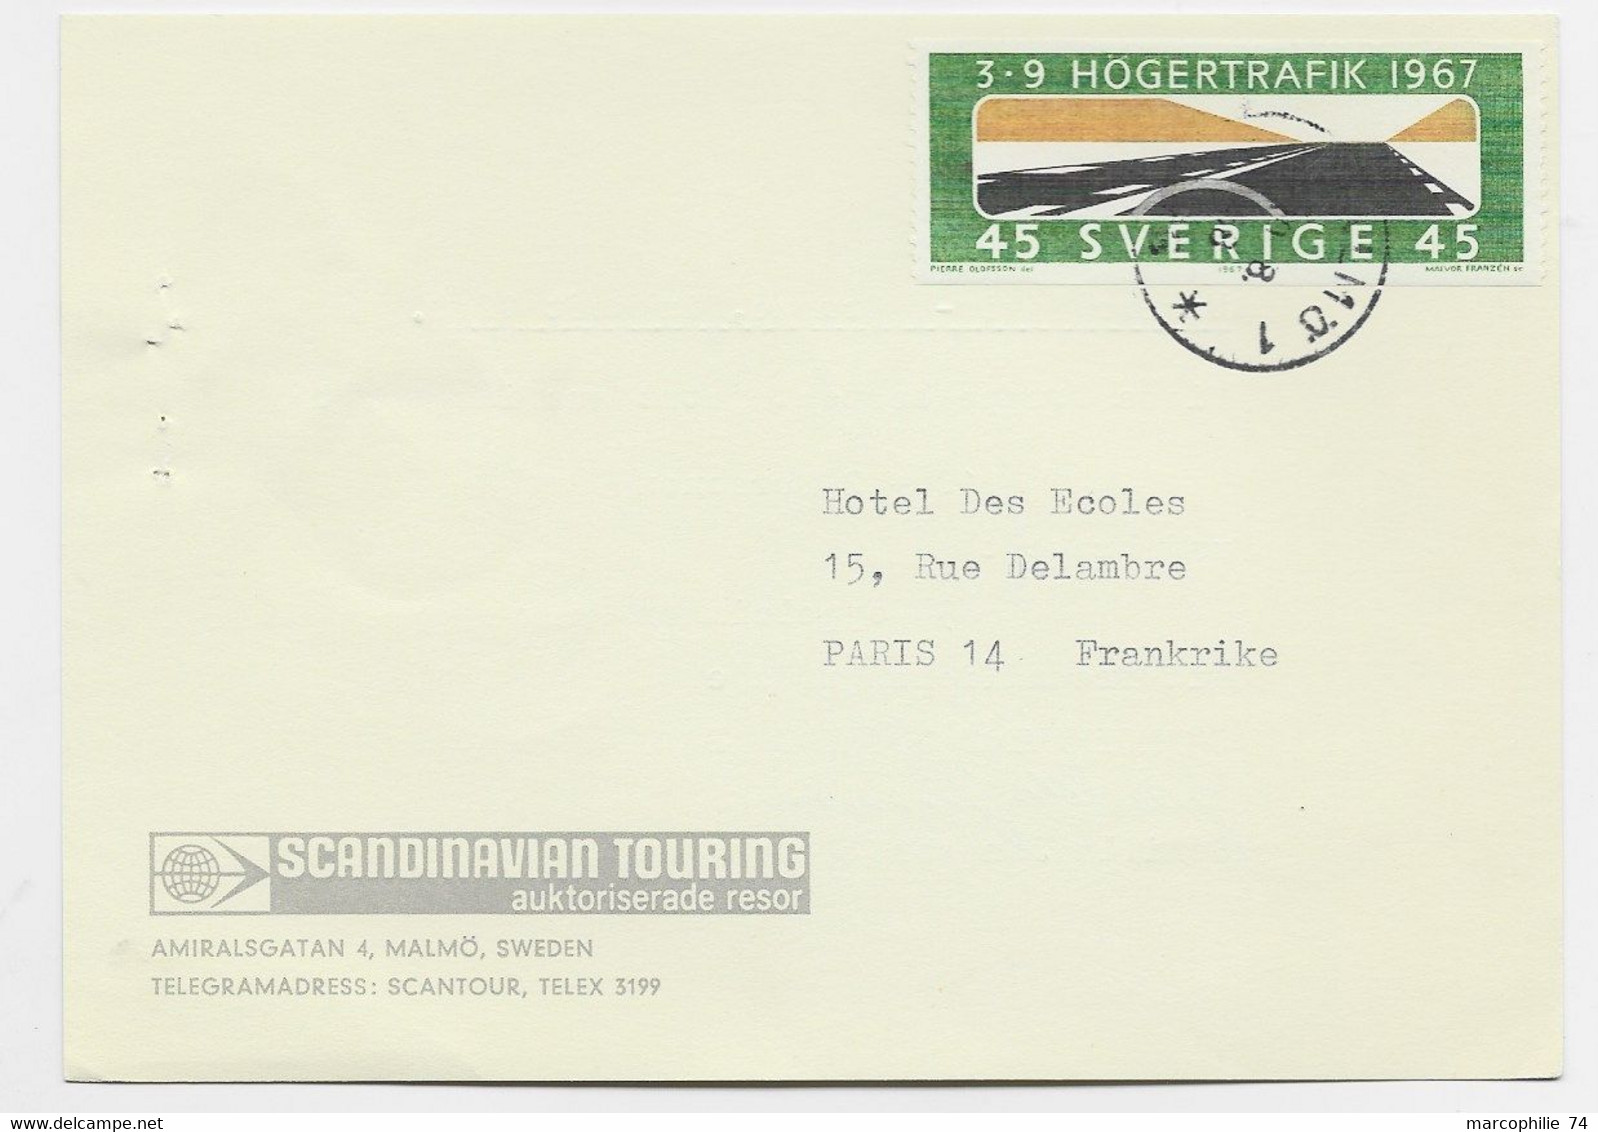 SVERIGE 45 SOLO CARD SCANDINAVIAN TOURING 1967 O FRANCE - Storia Postale